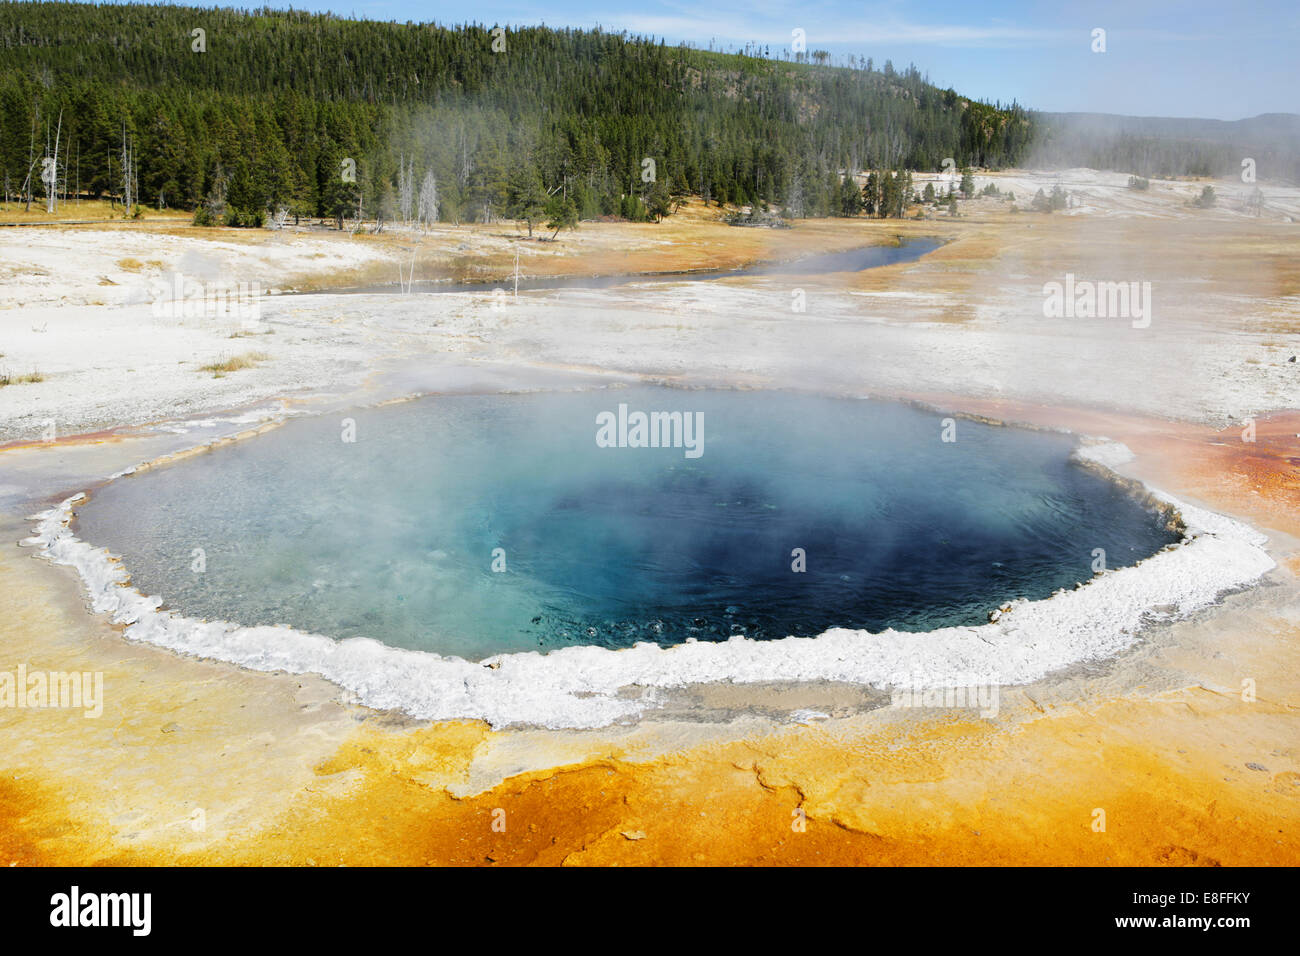 Hot spring, Yellowstone National Park, Wyoming, United States Stock Photo